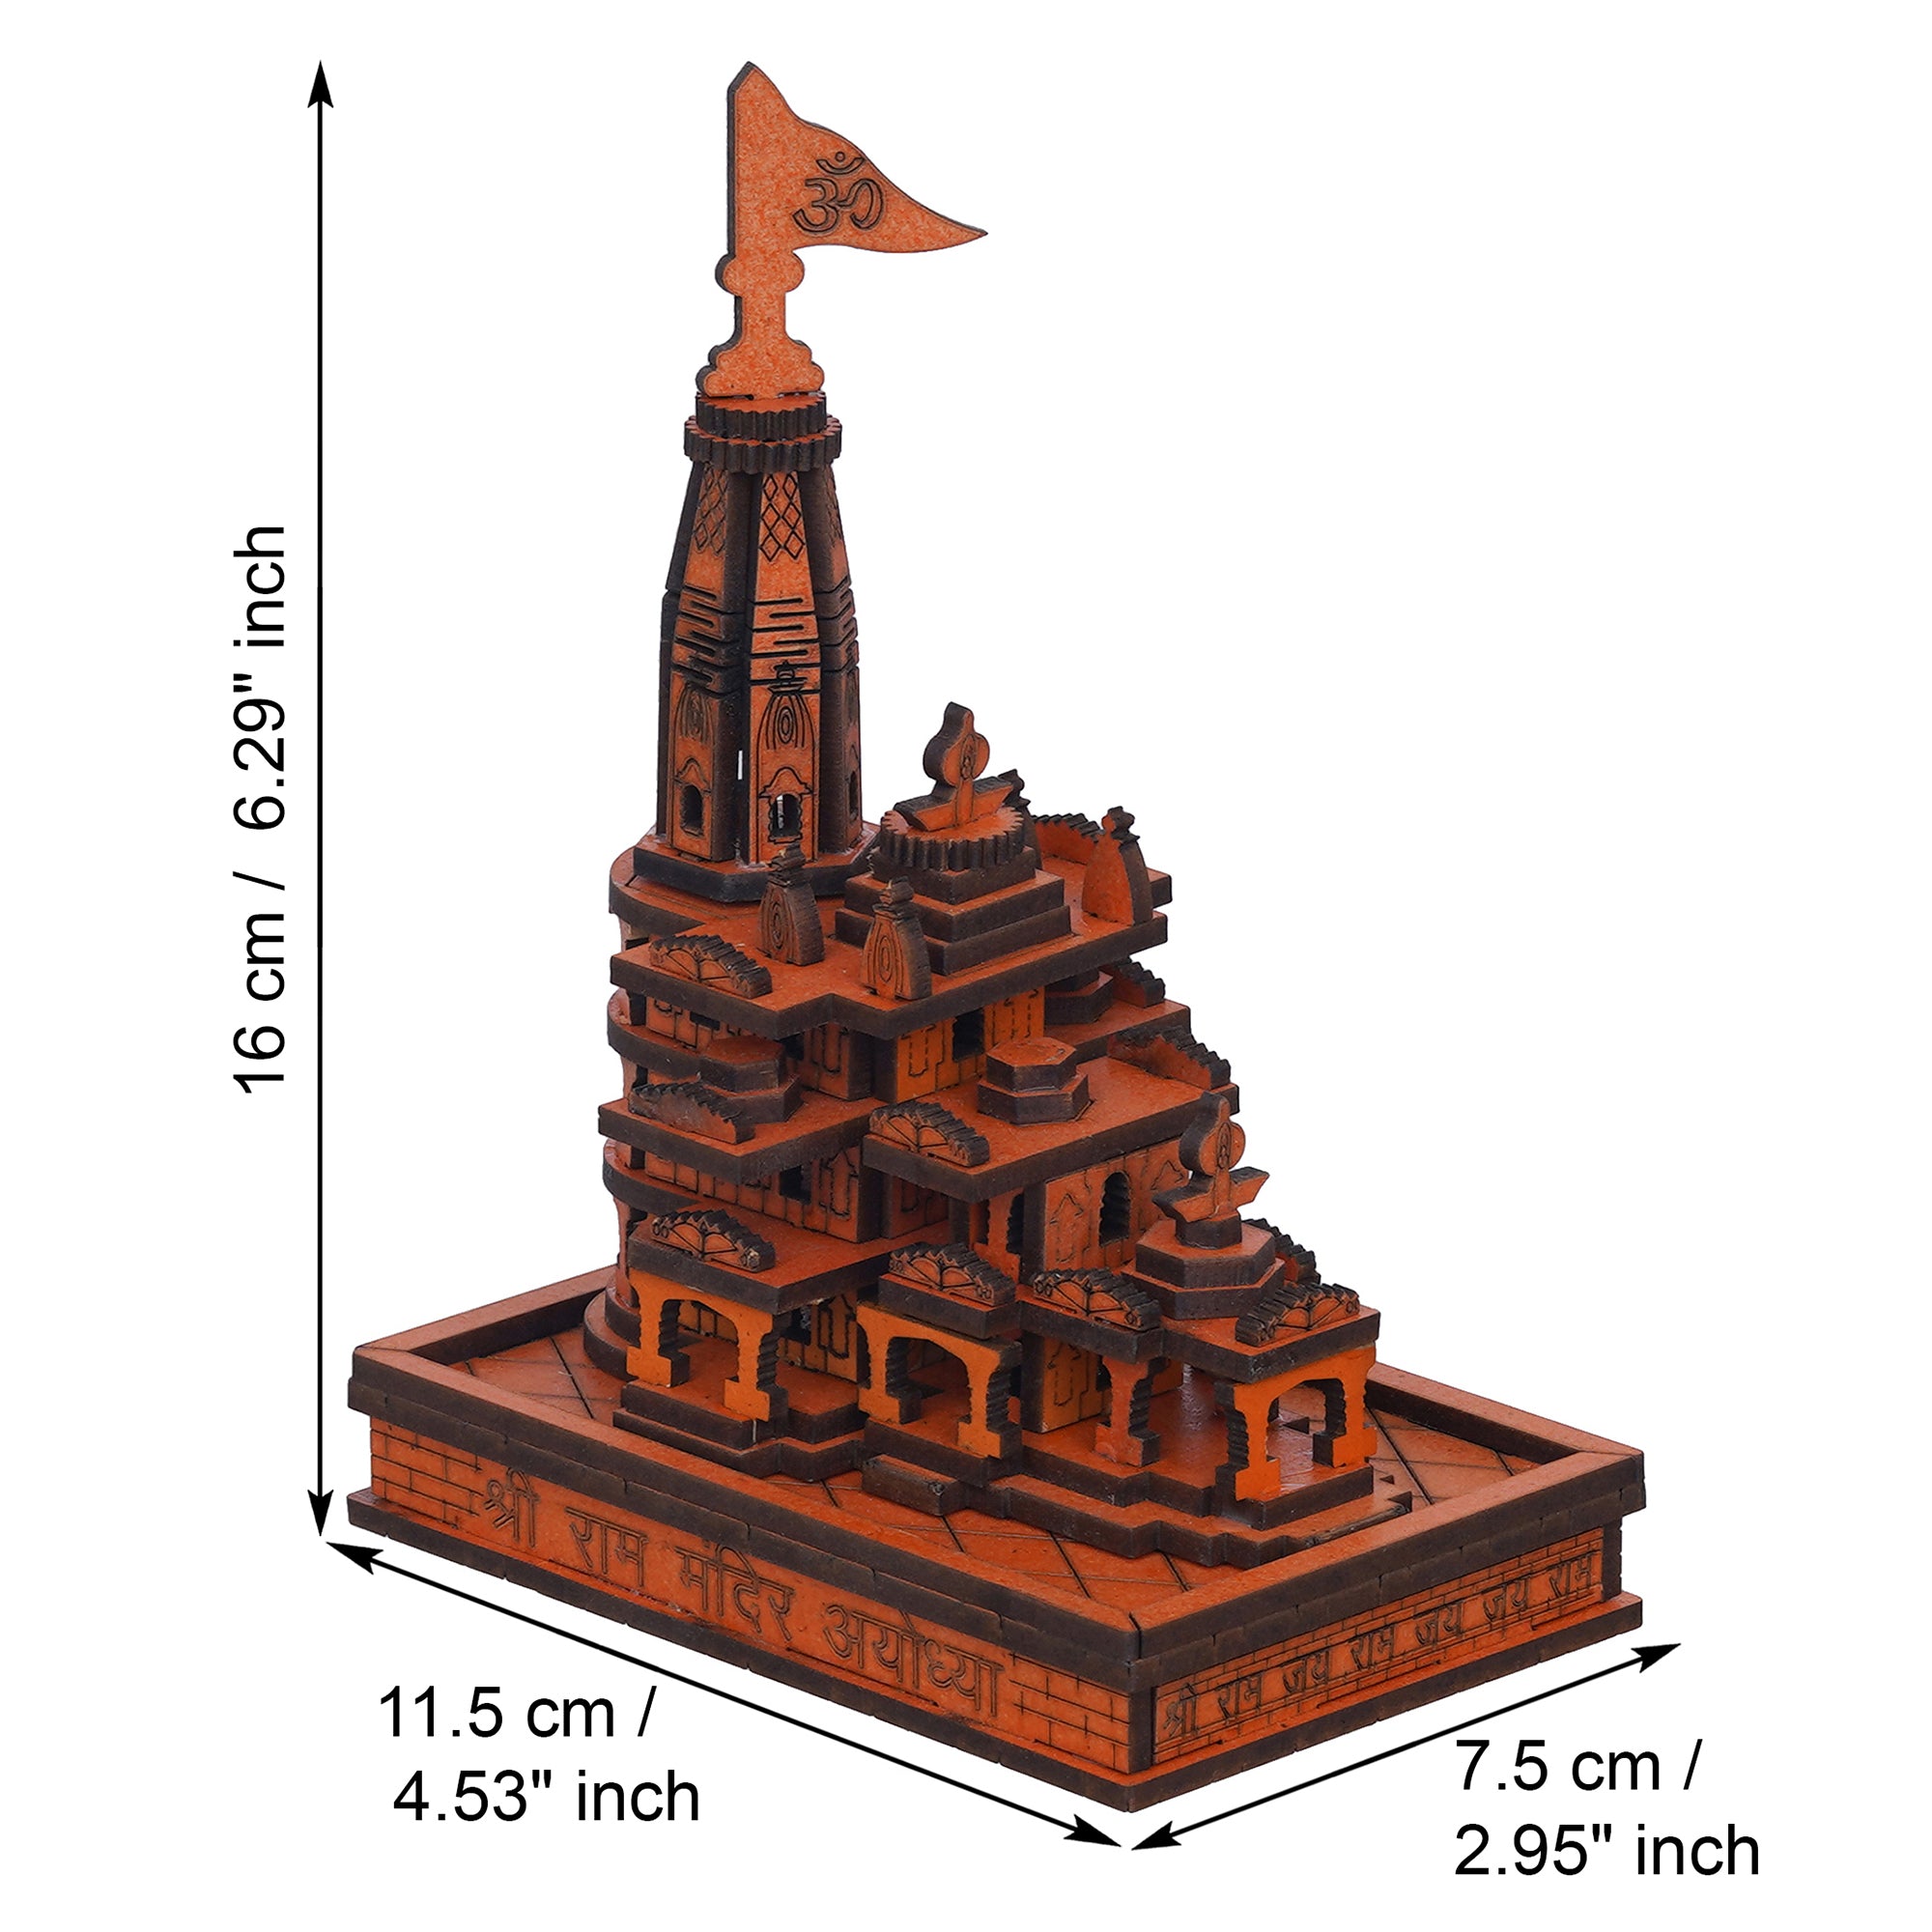 eCraftIndia Shri Ram Mandir Ayodhya Model - Wooden MDF Craftsmanship Authentic Designer Temple - Ideal for Home Temple, Decor, and Spiritual Gifting (Orange, Brown) 3